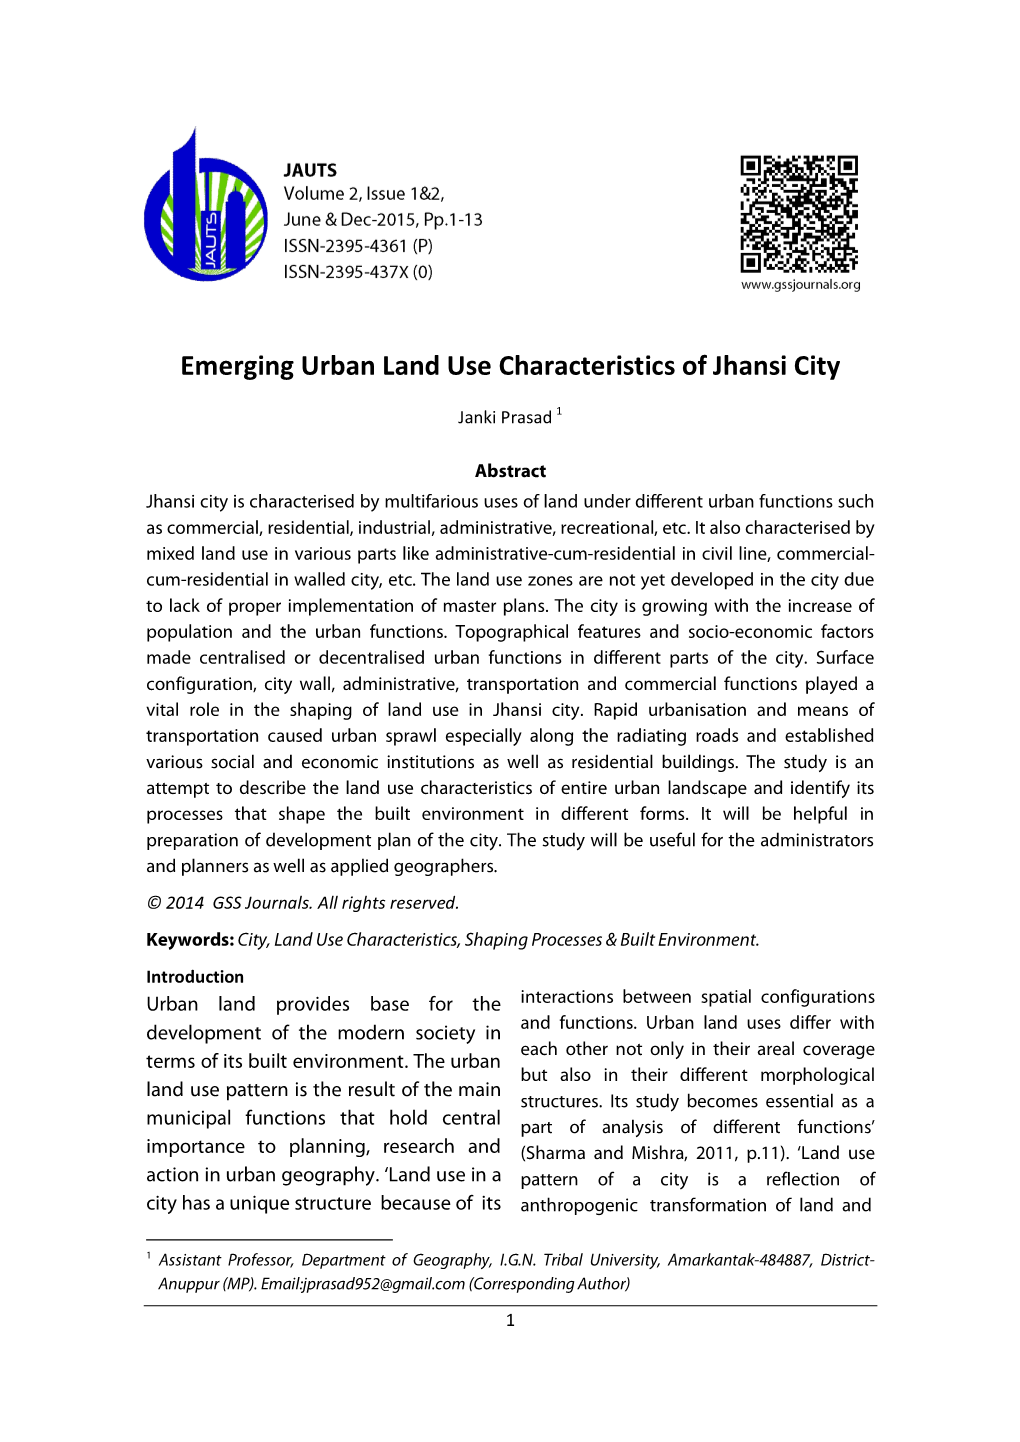 Emerging Urban Land Use Characteristics of Jhansi City